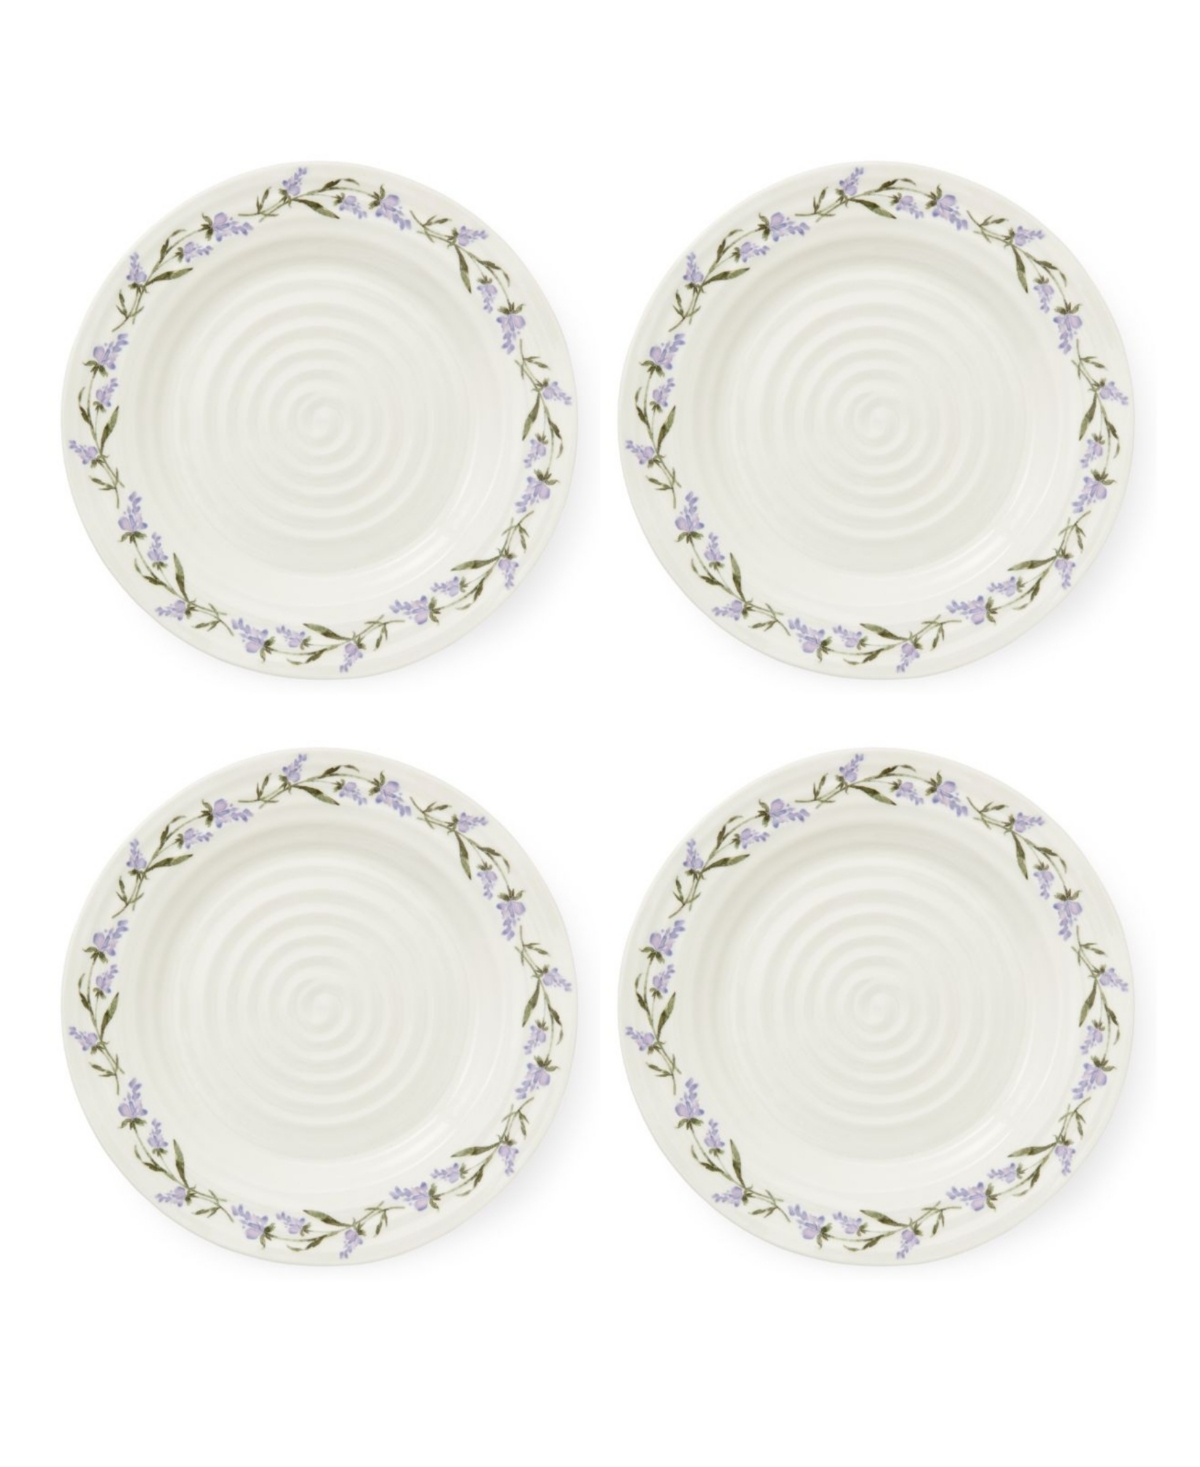 Sophie Conran Lavandula Dinner Plates, Set of 4 - White